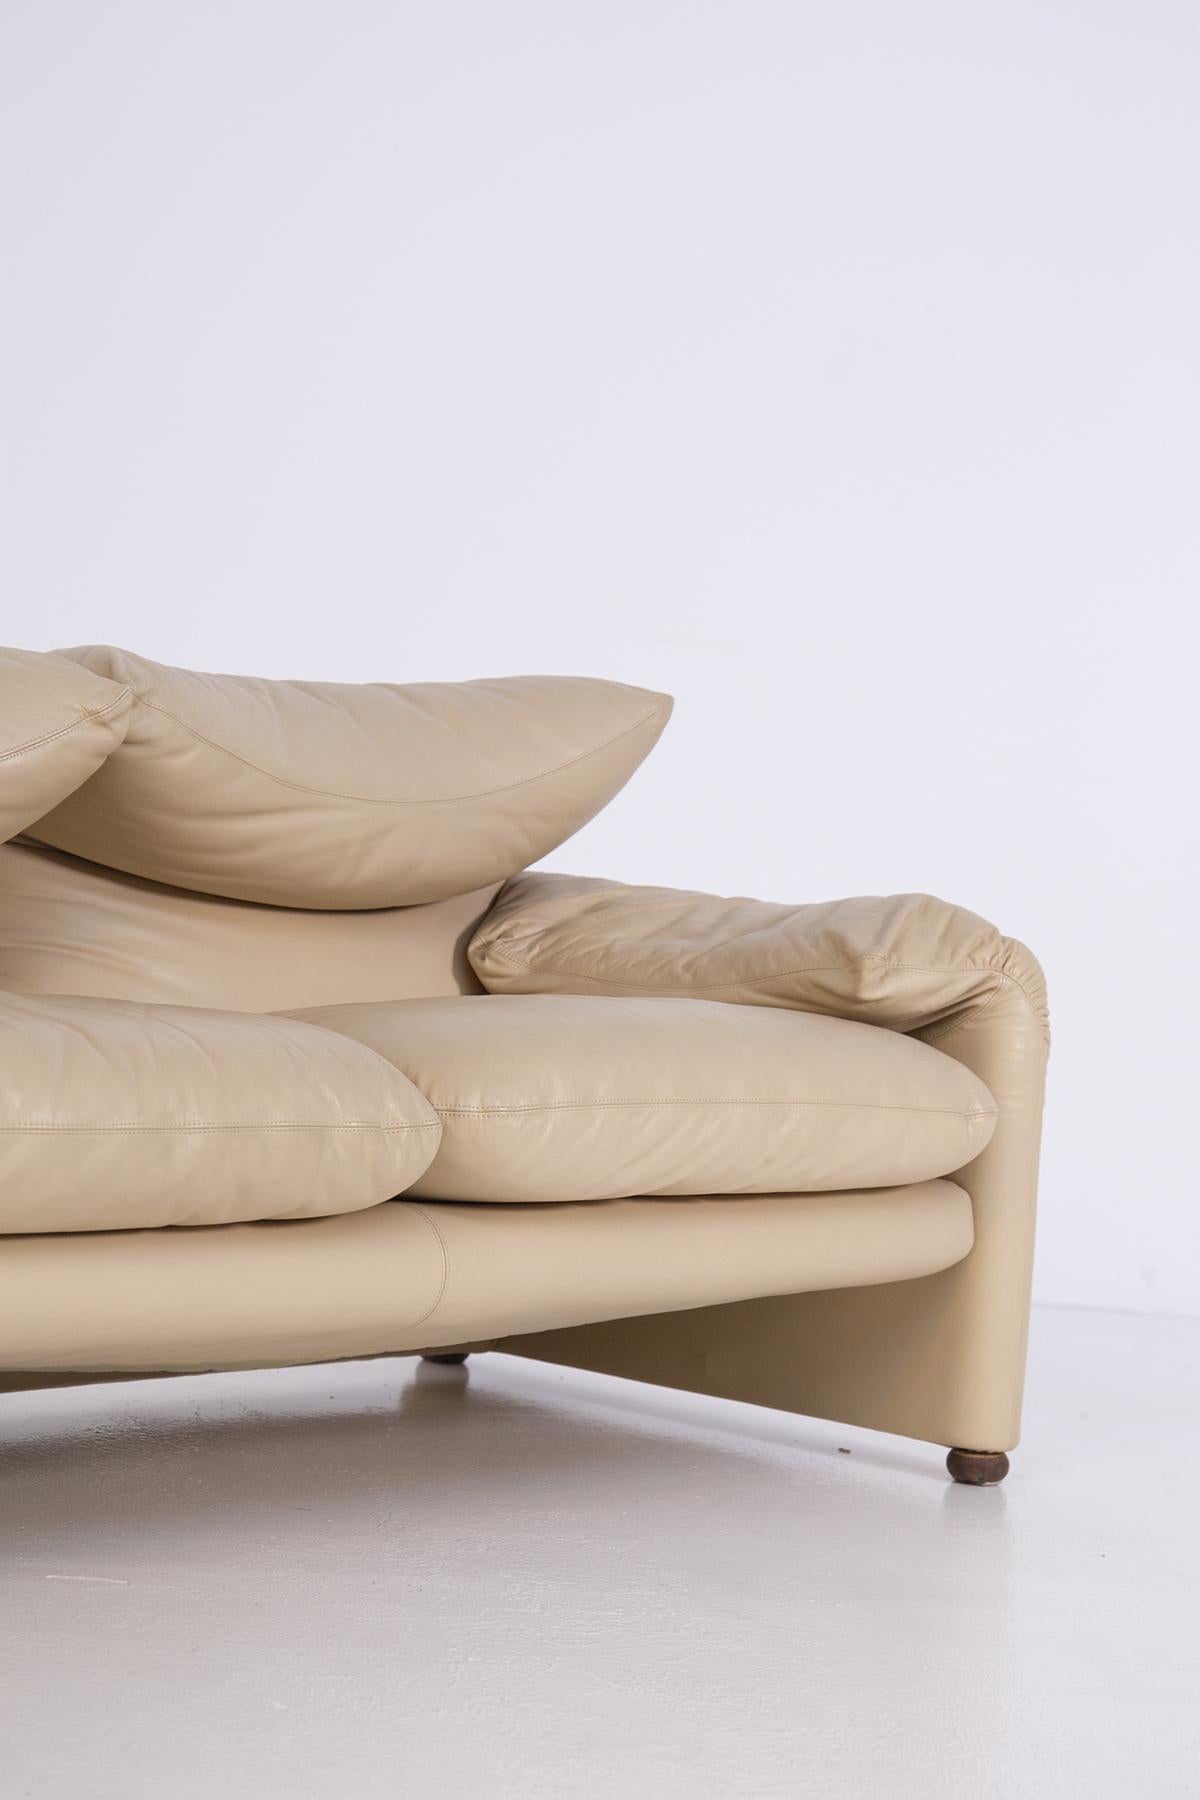 Mid-Century Modern Vico Magistretti Italian Sofa in Leather for Cassina, First Edition